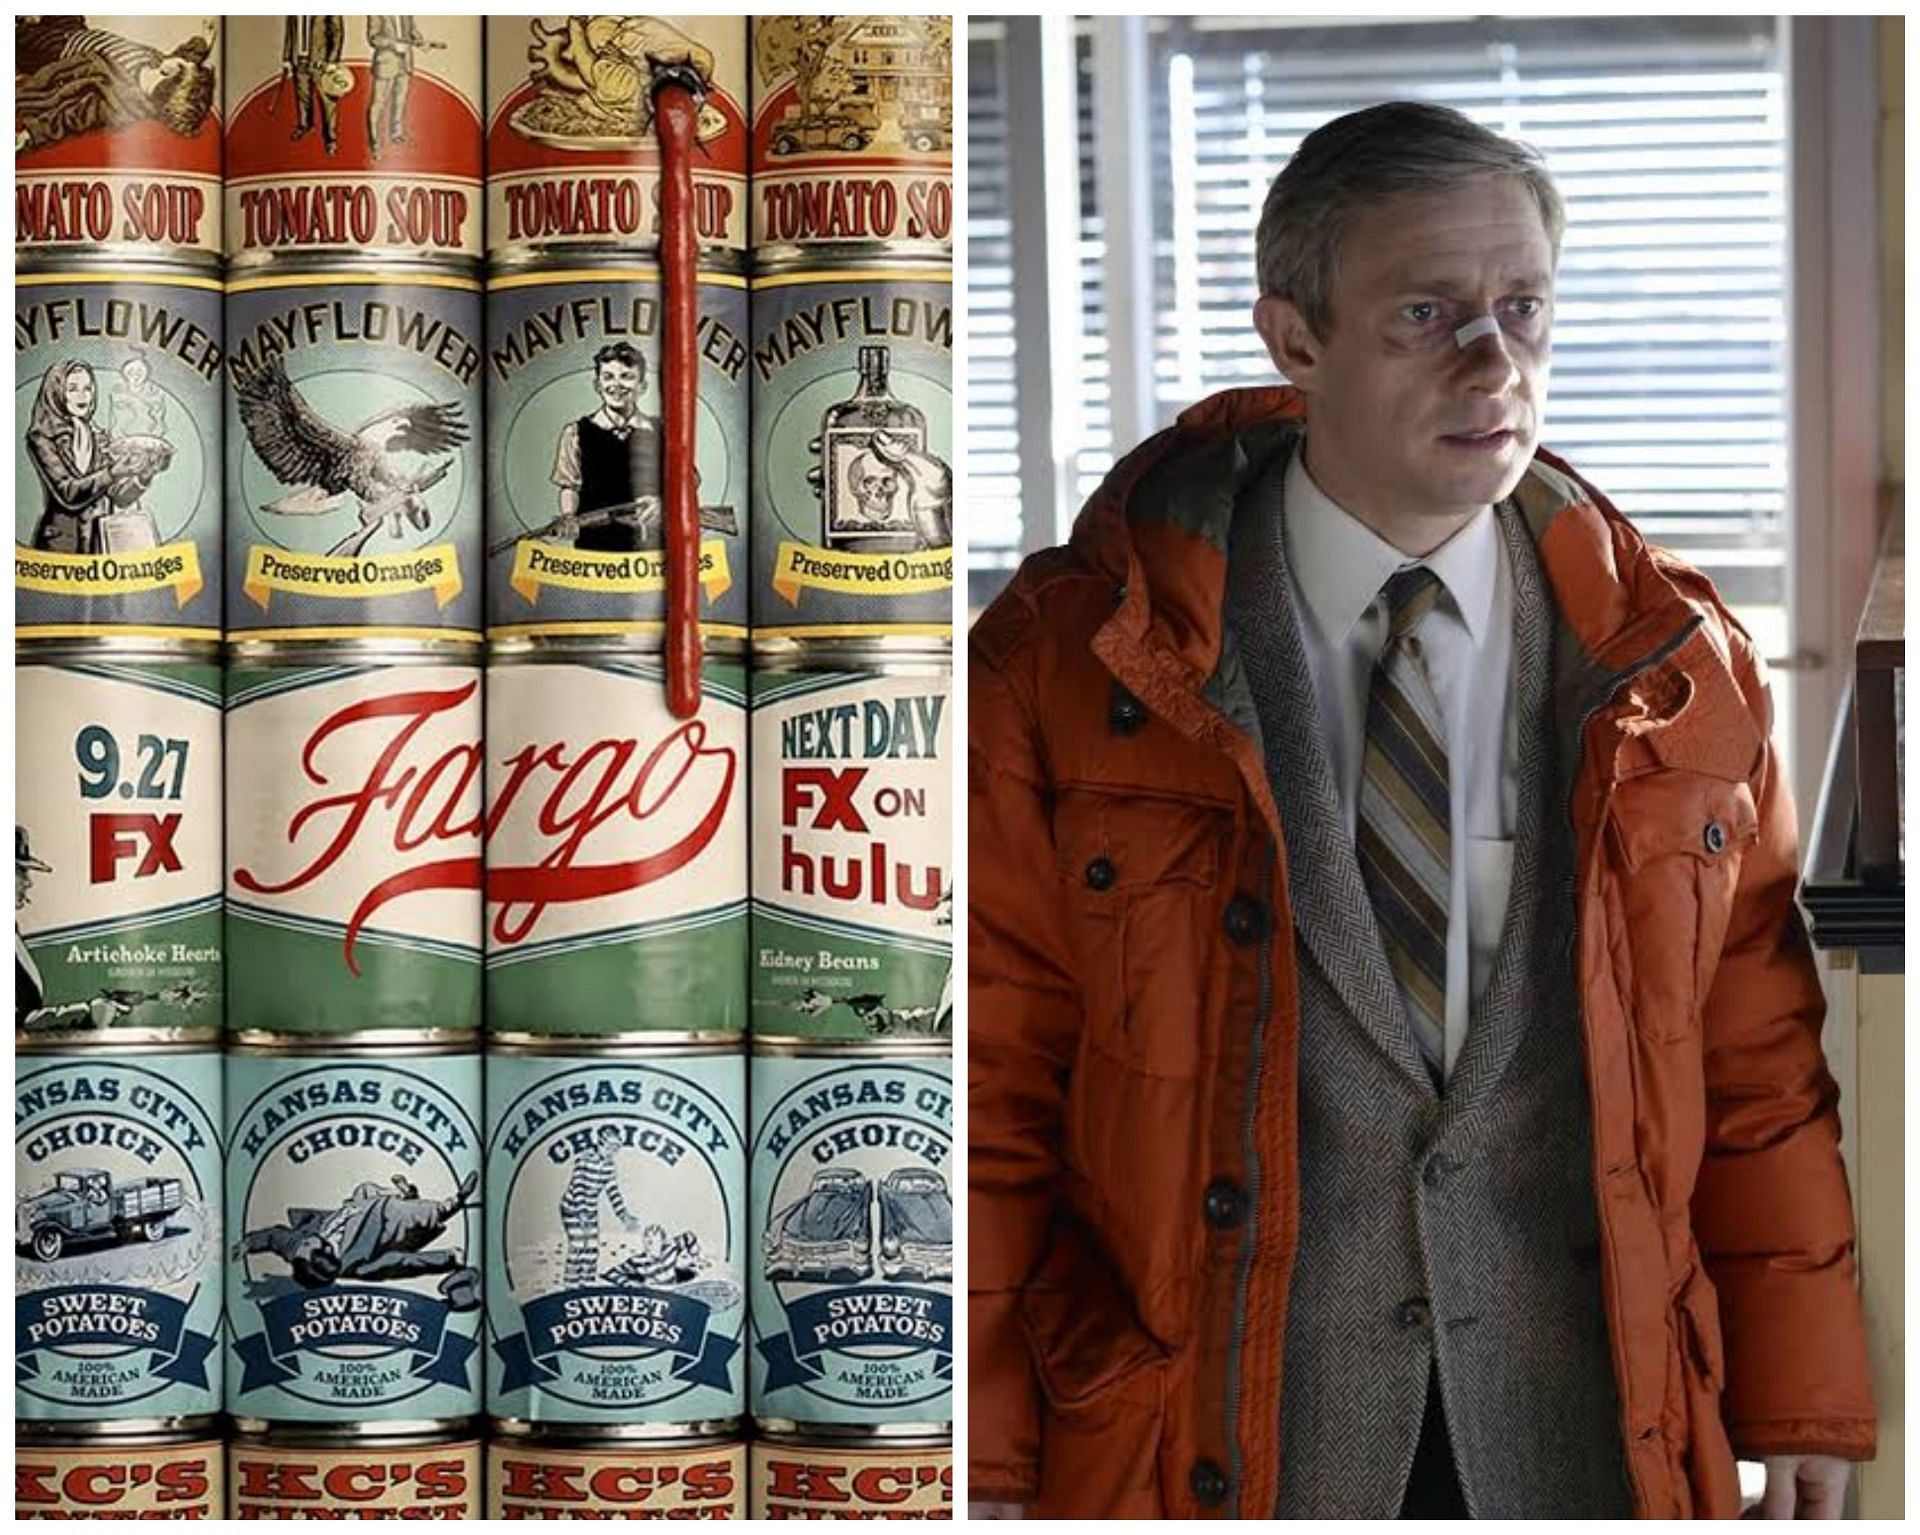 Fargo Poster / Still of Martin Freeman from the show (Images via IMDb)